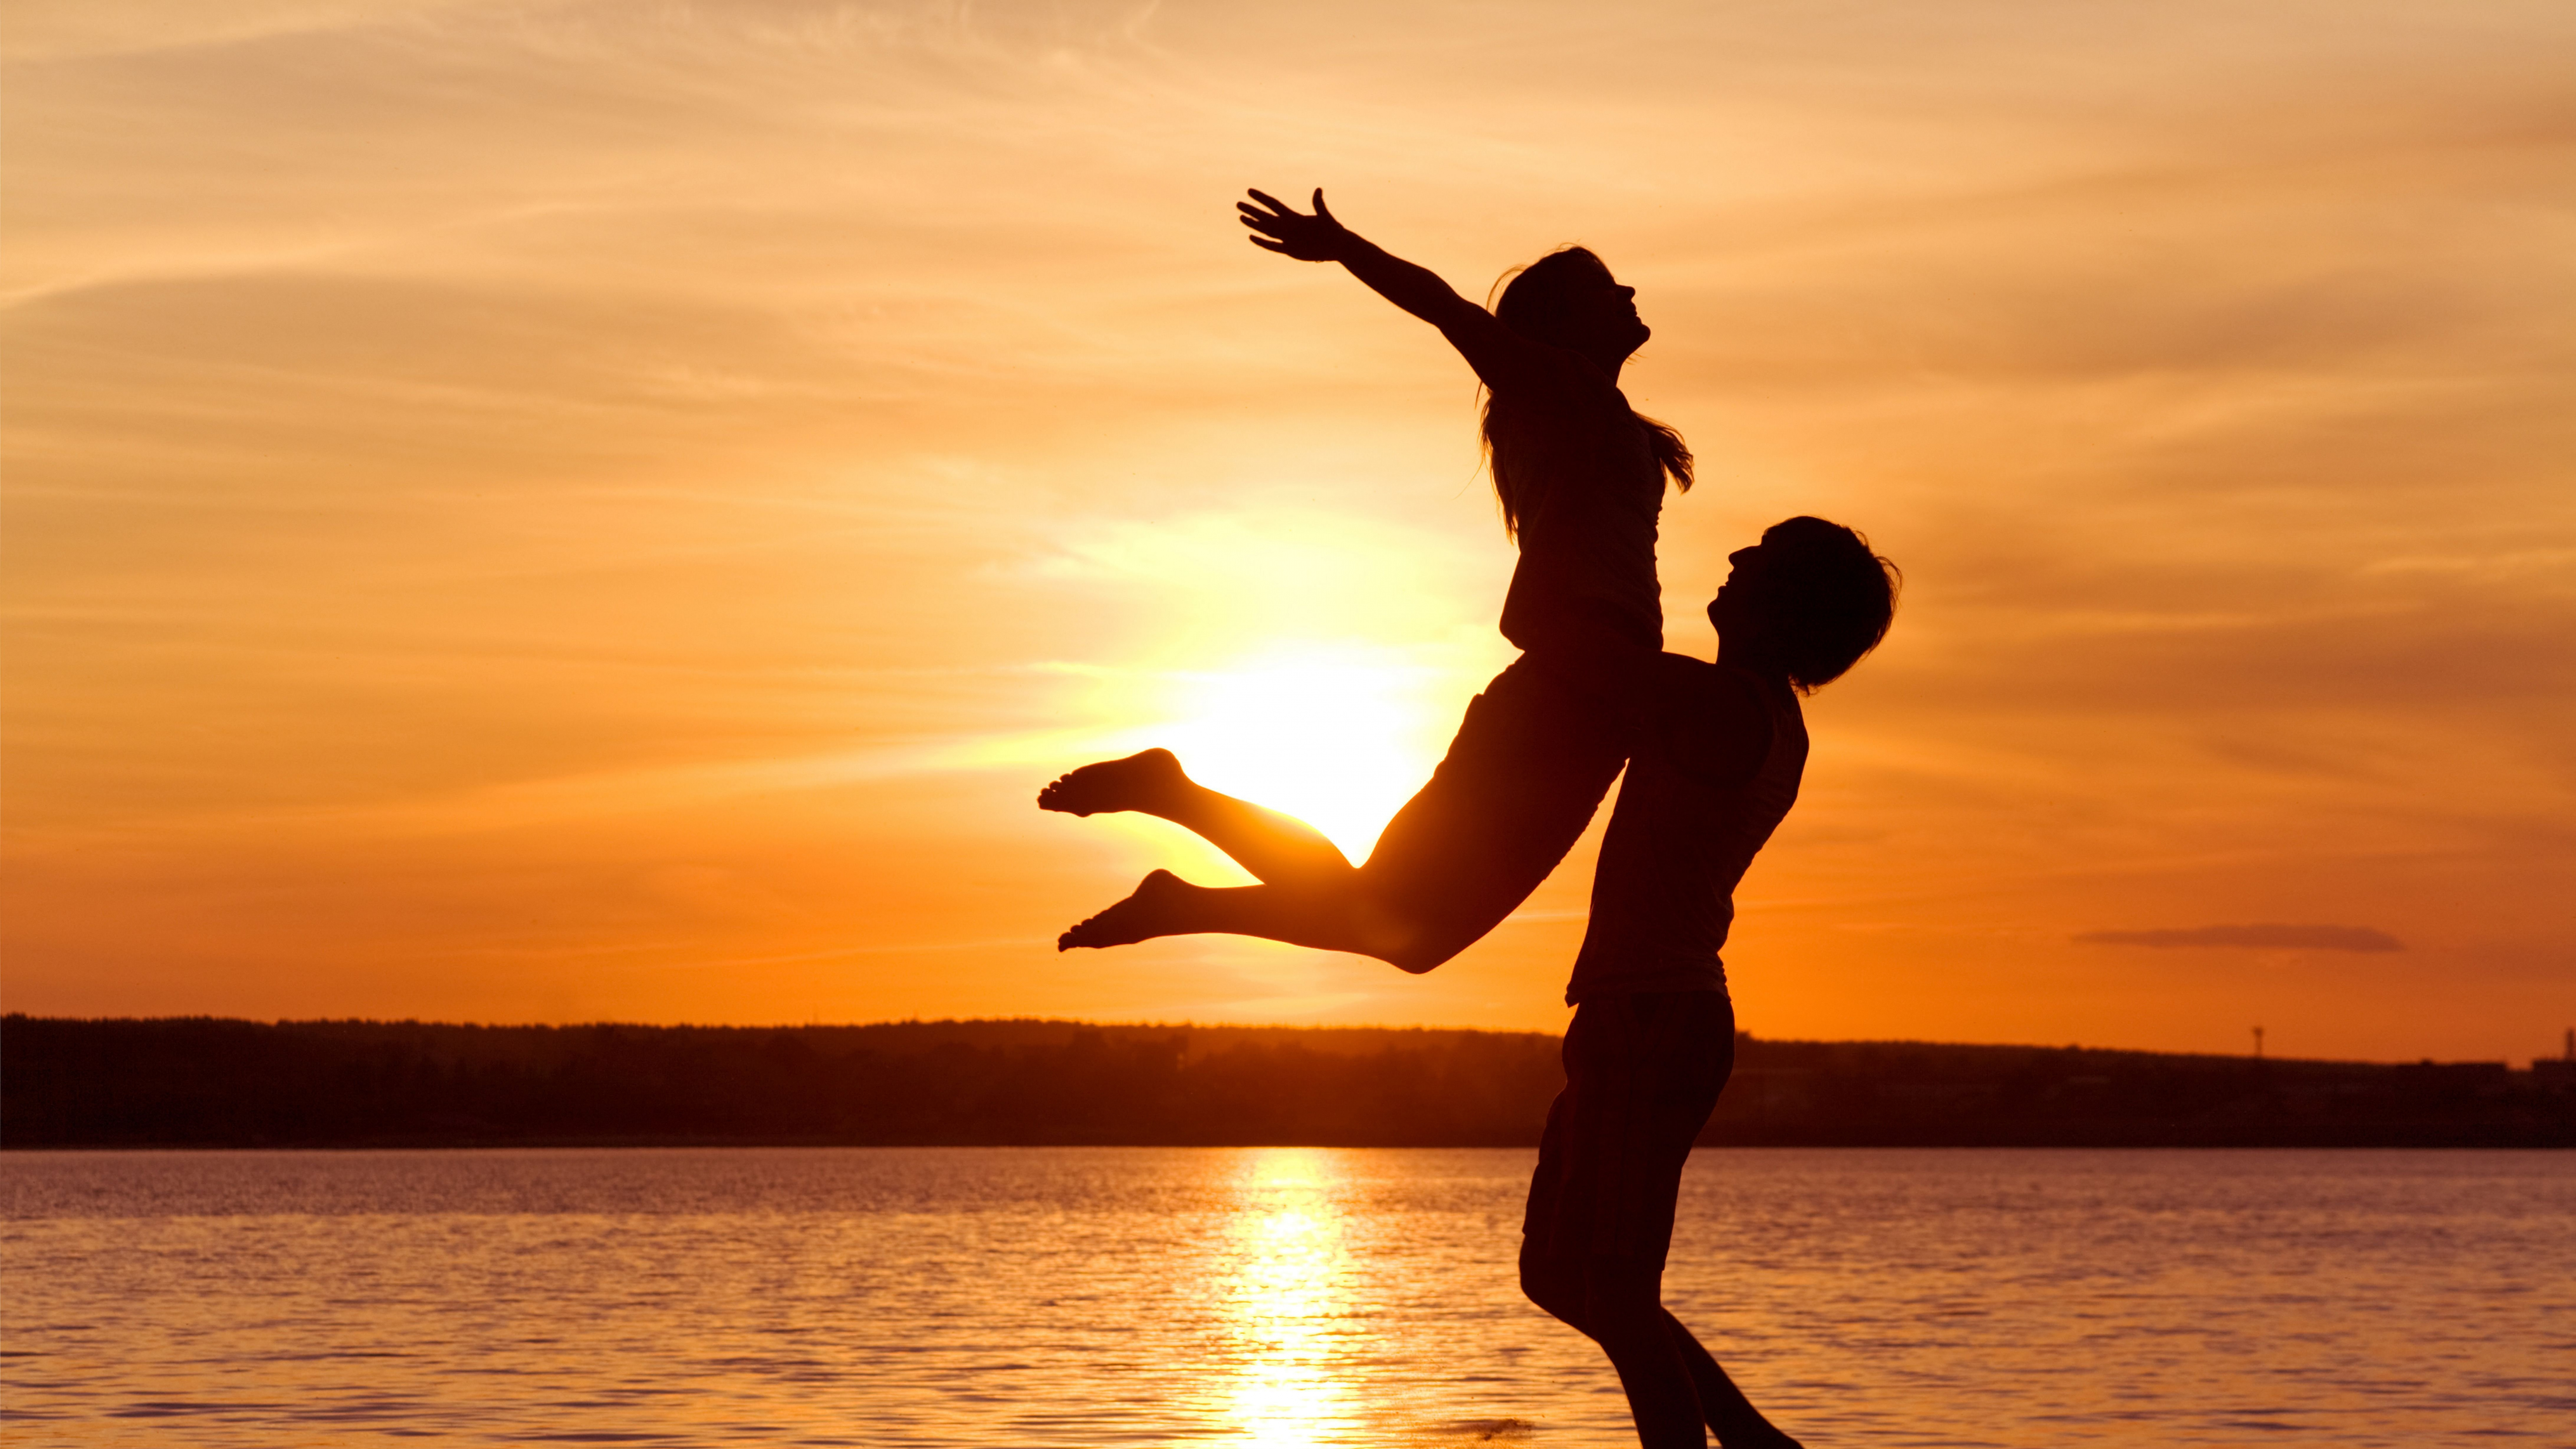 Romance, Water, Sunset, Fun, Jumping. Wallpaper in 7680x4320 Resolution